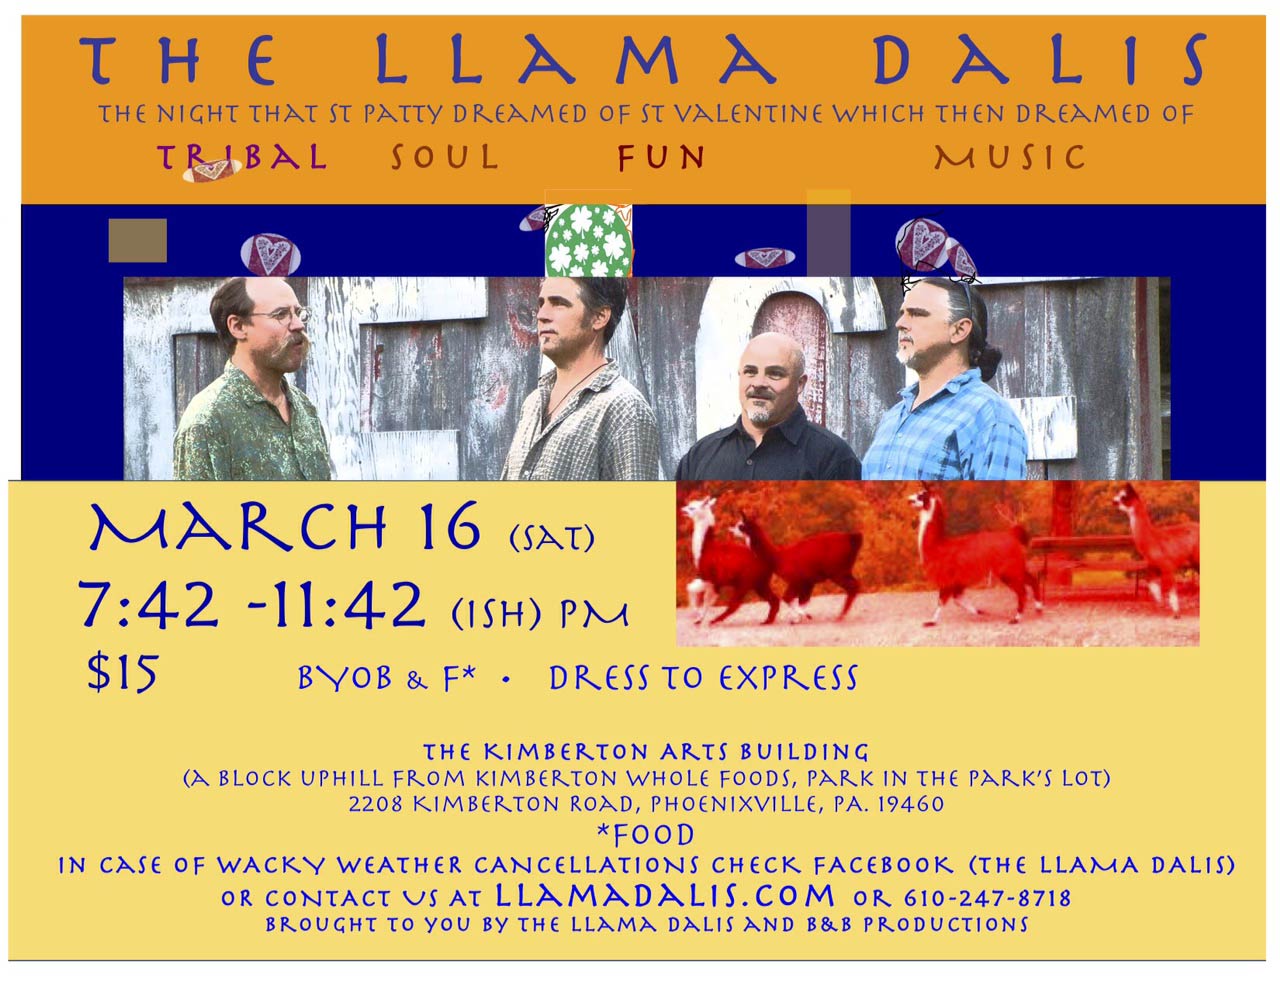 The Dali Llama’s do the You Can Still Smooch If You Wanna Fancy Dancy at Kimberton Arts Center March 16th